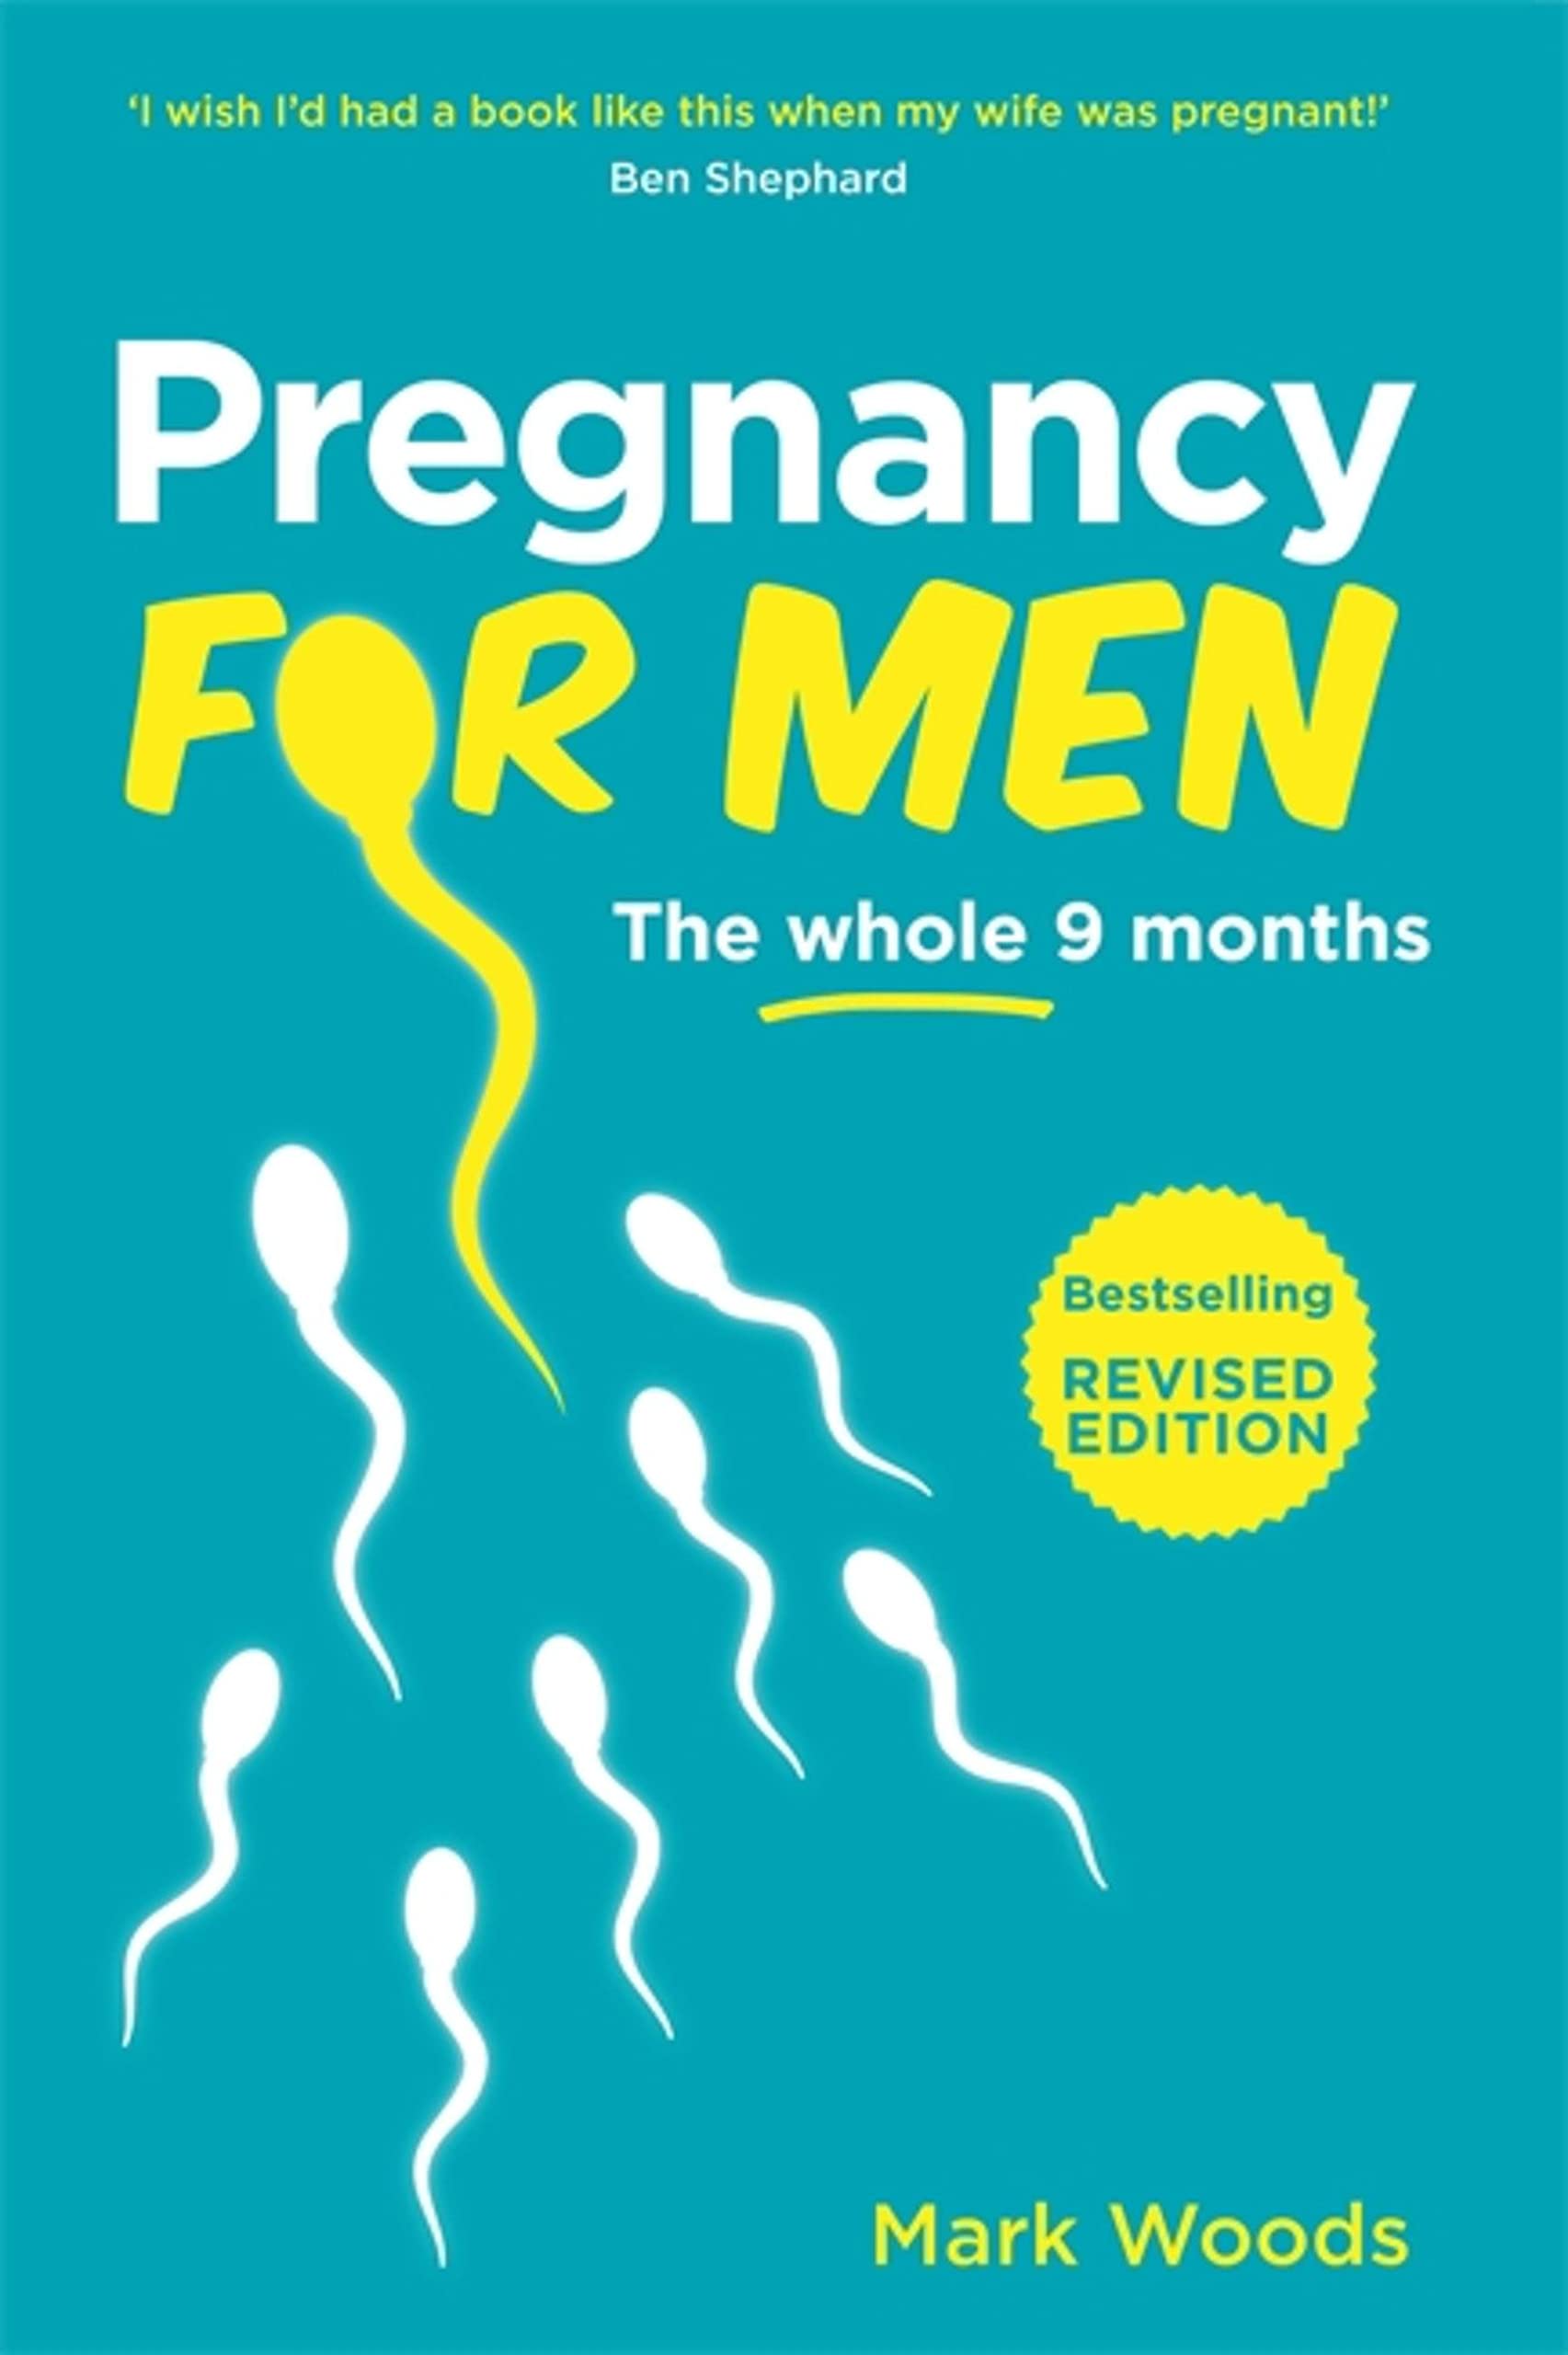 "Pregnancy For Men" by Mark Woods